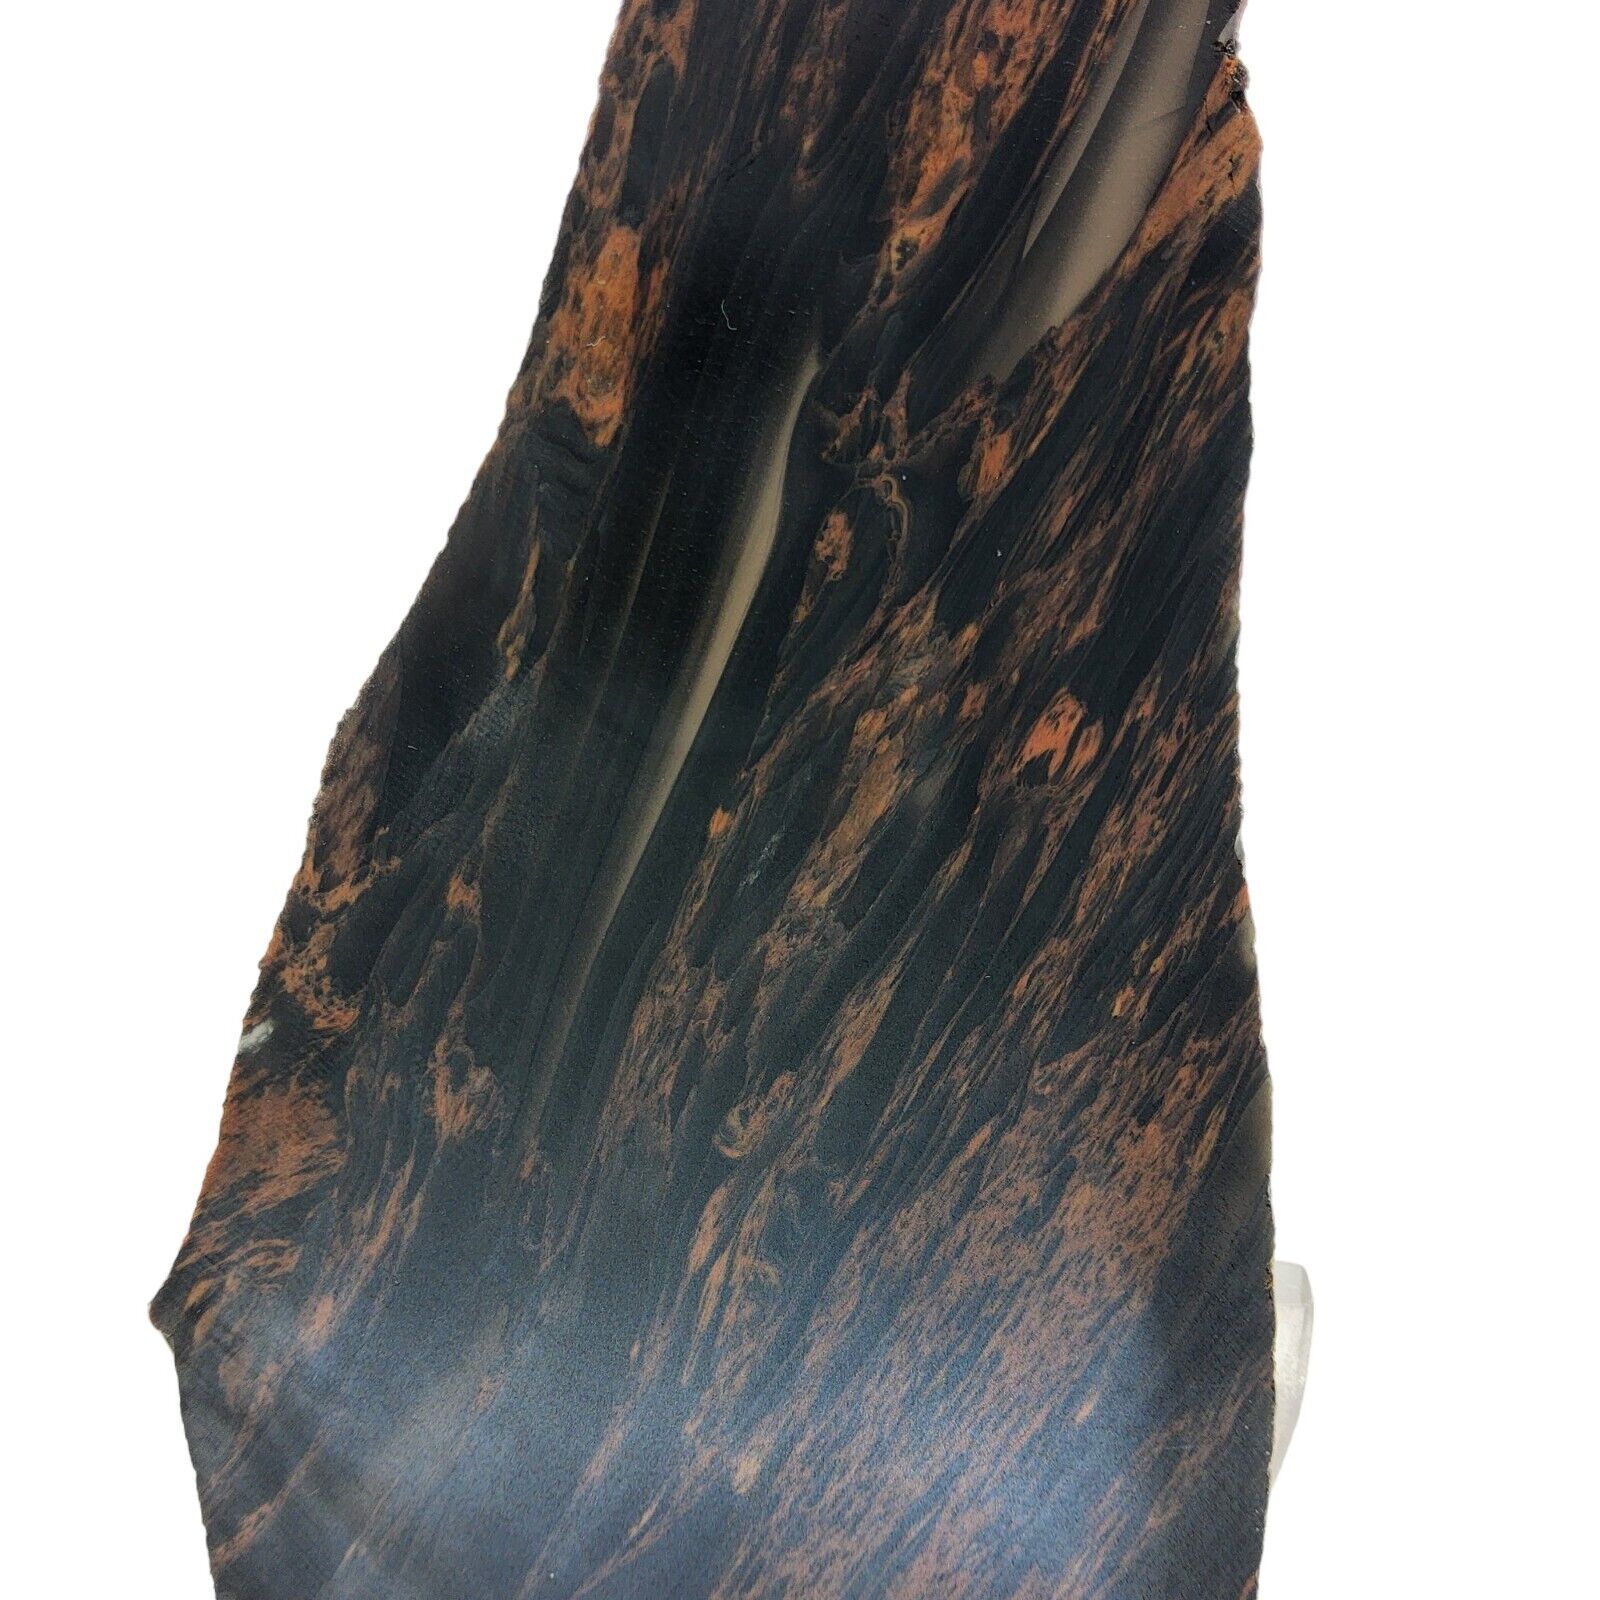 Triple Flow, Mahogany Obsidian slab, cabbing rough, lapidary, gemstone, #R-6017